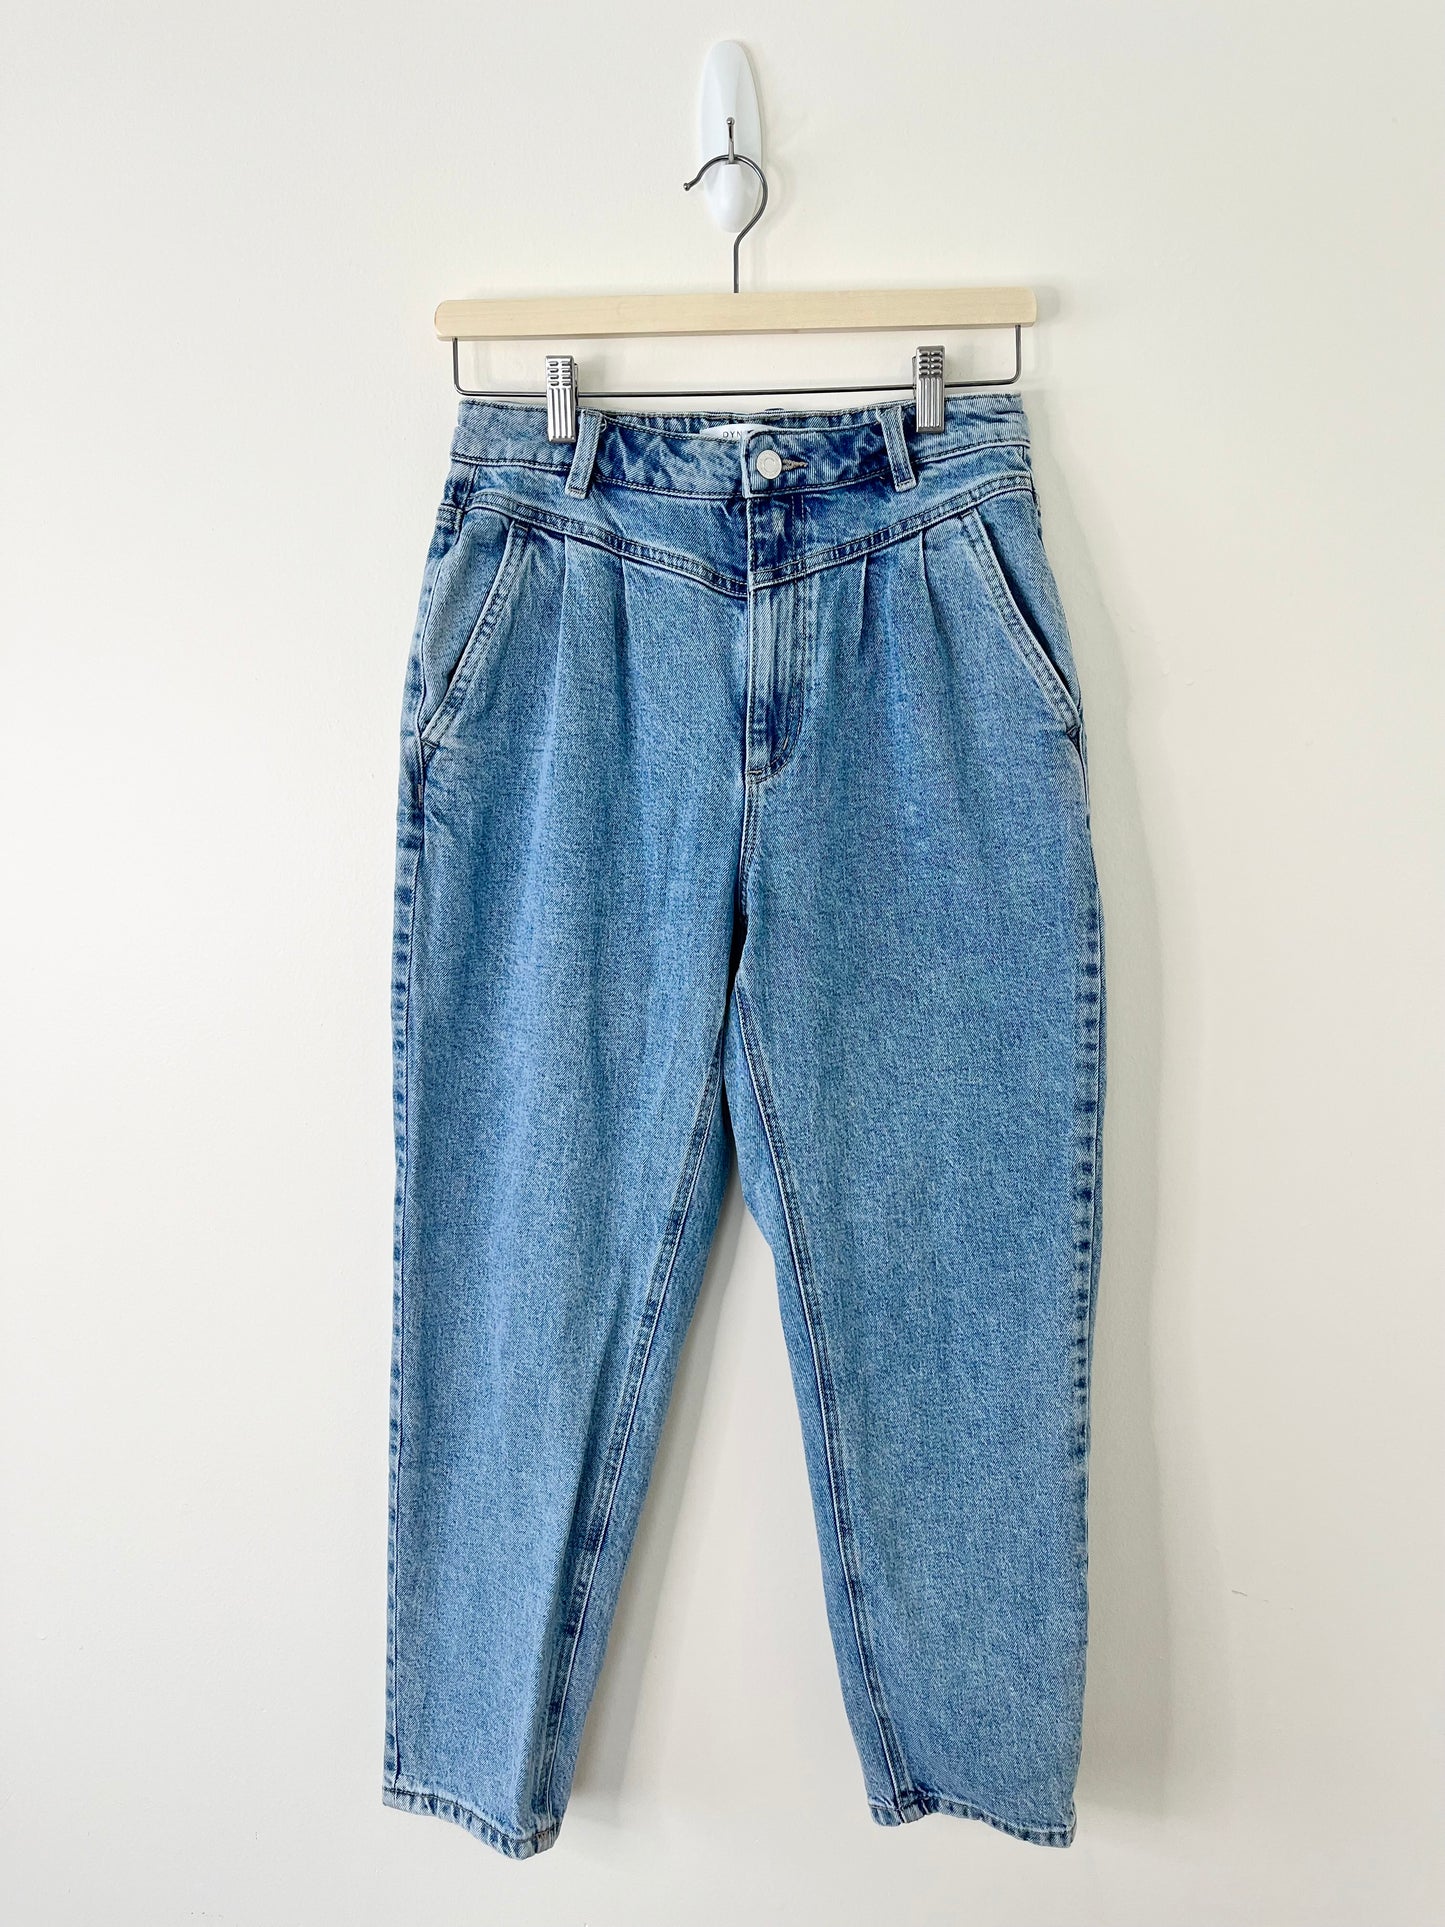 Mom Jeans (13.5" across waist)